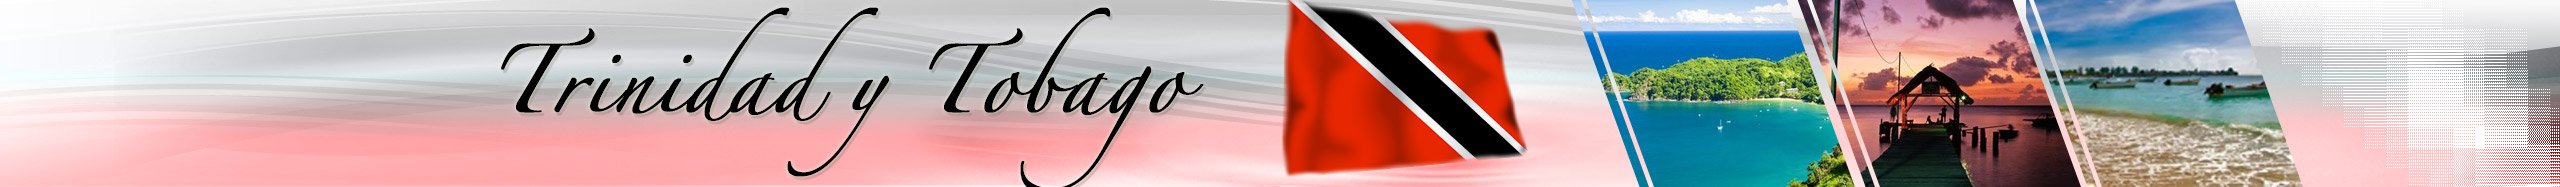 Trinidad and Tobago Medical Tourism Image